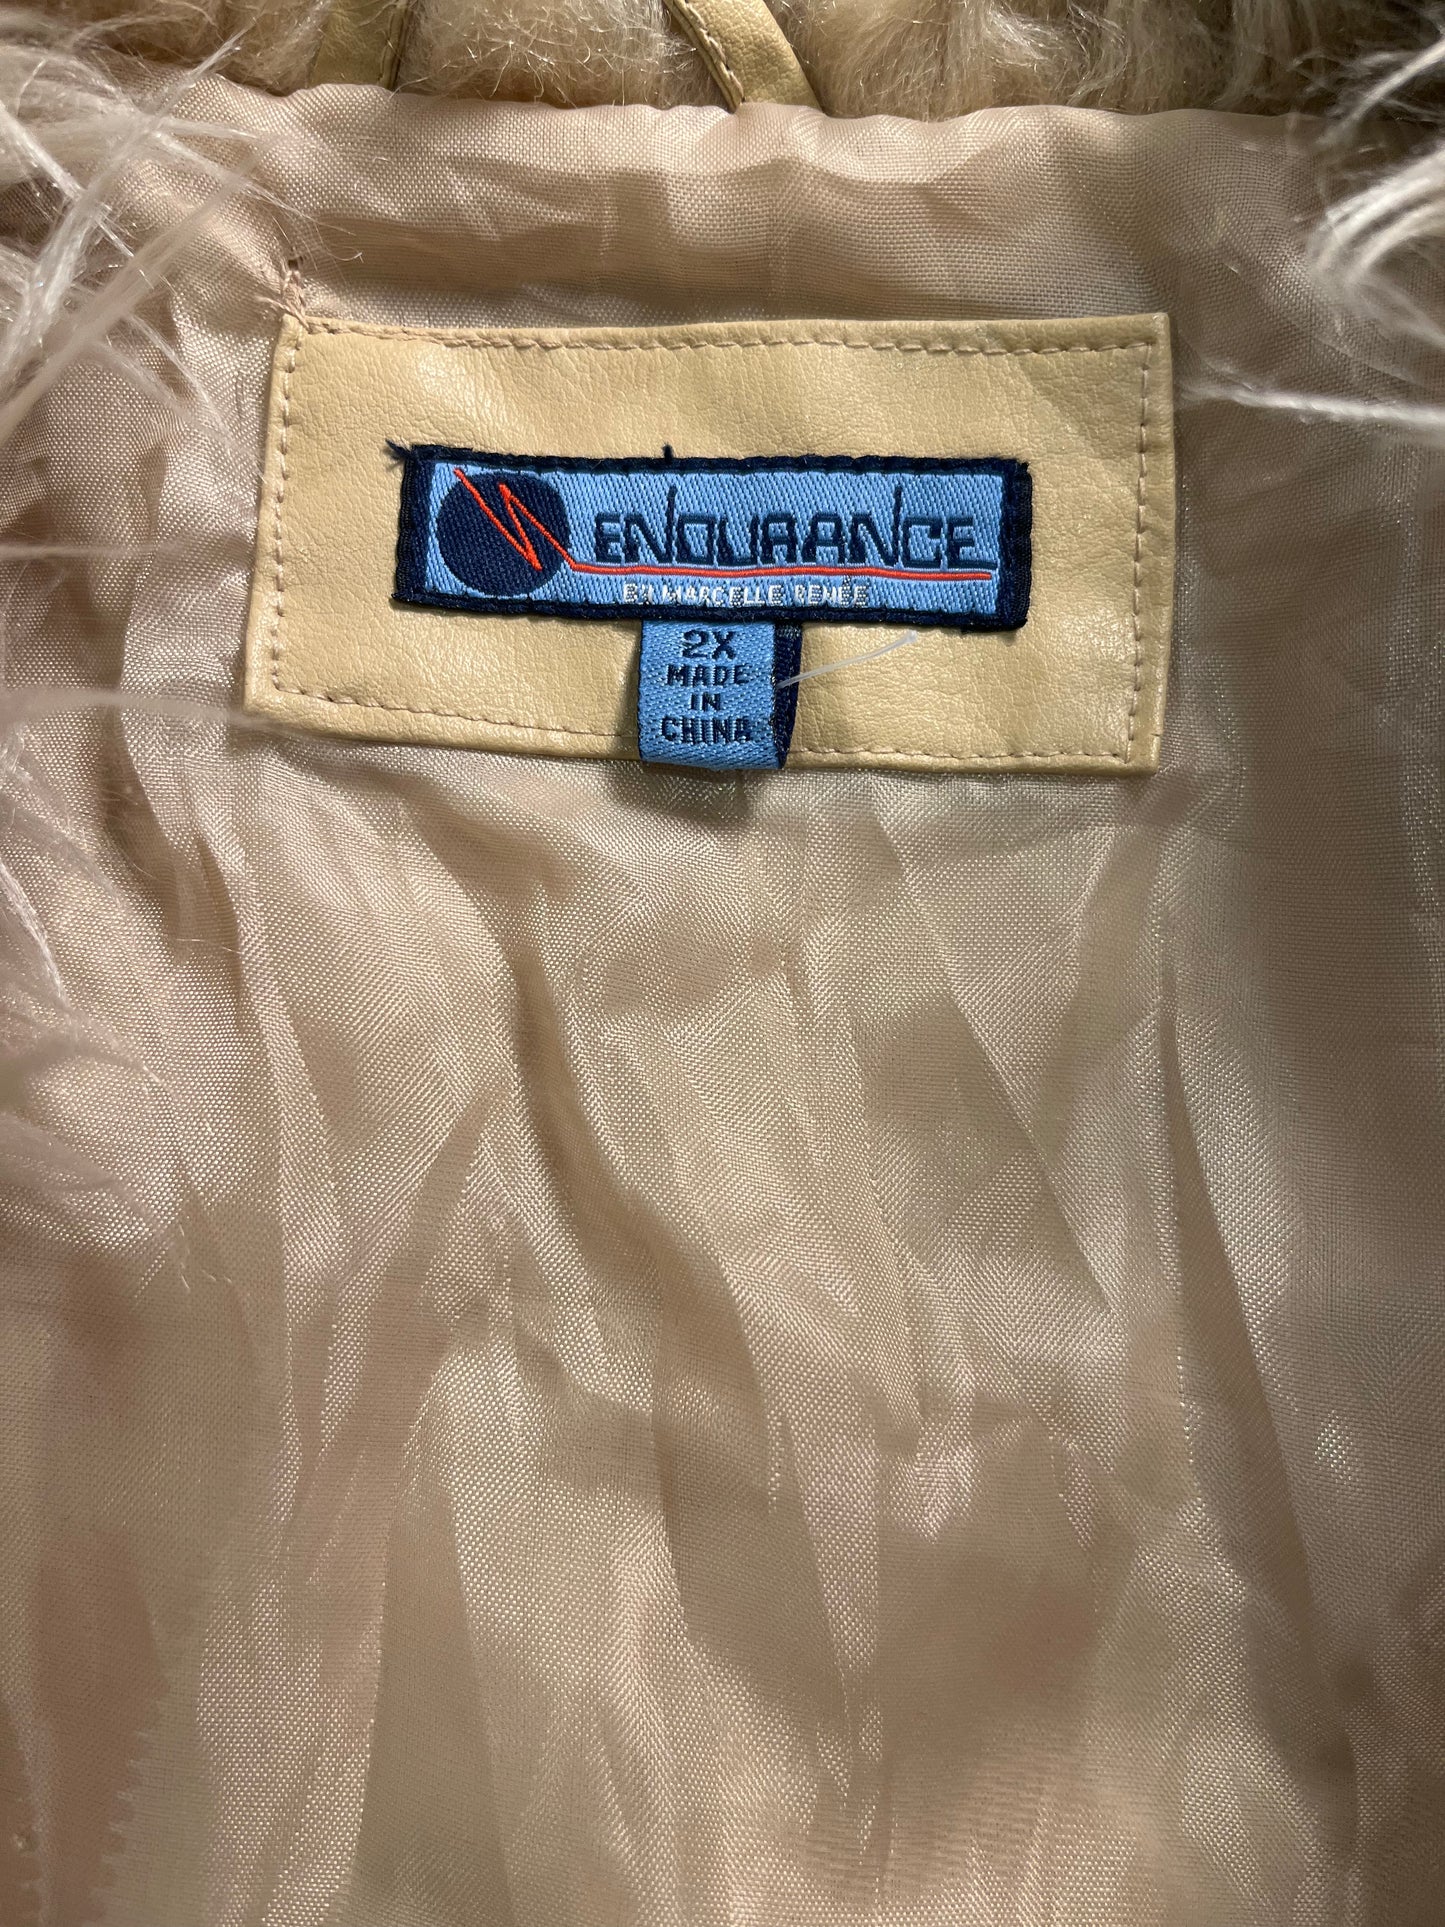 Y2k 'Endurance' Beige Faux Leather Jacket / 2X